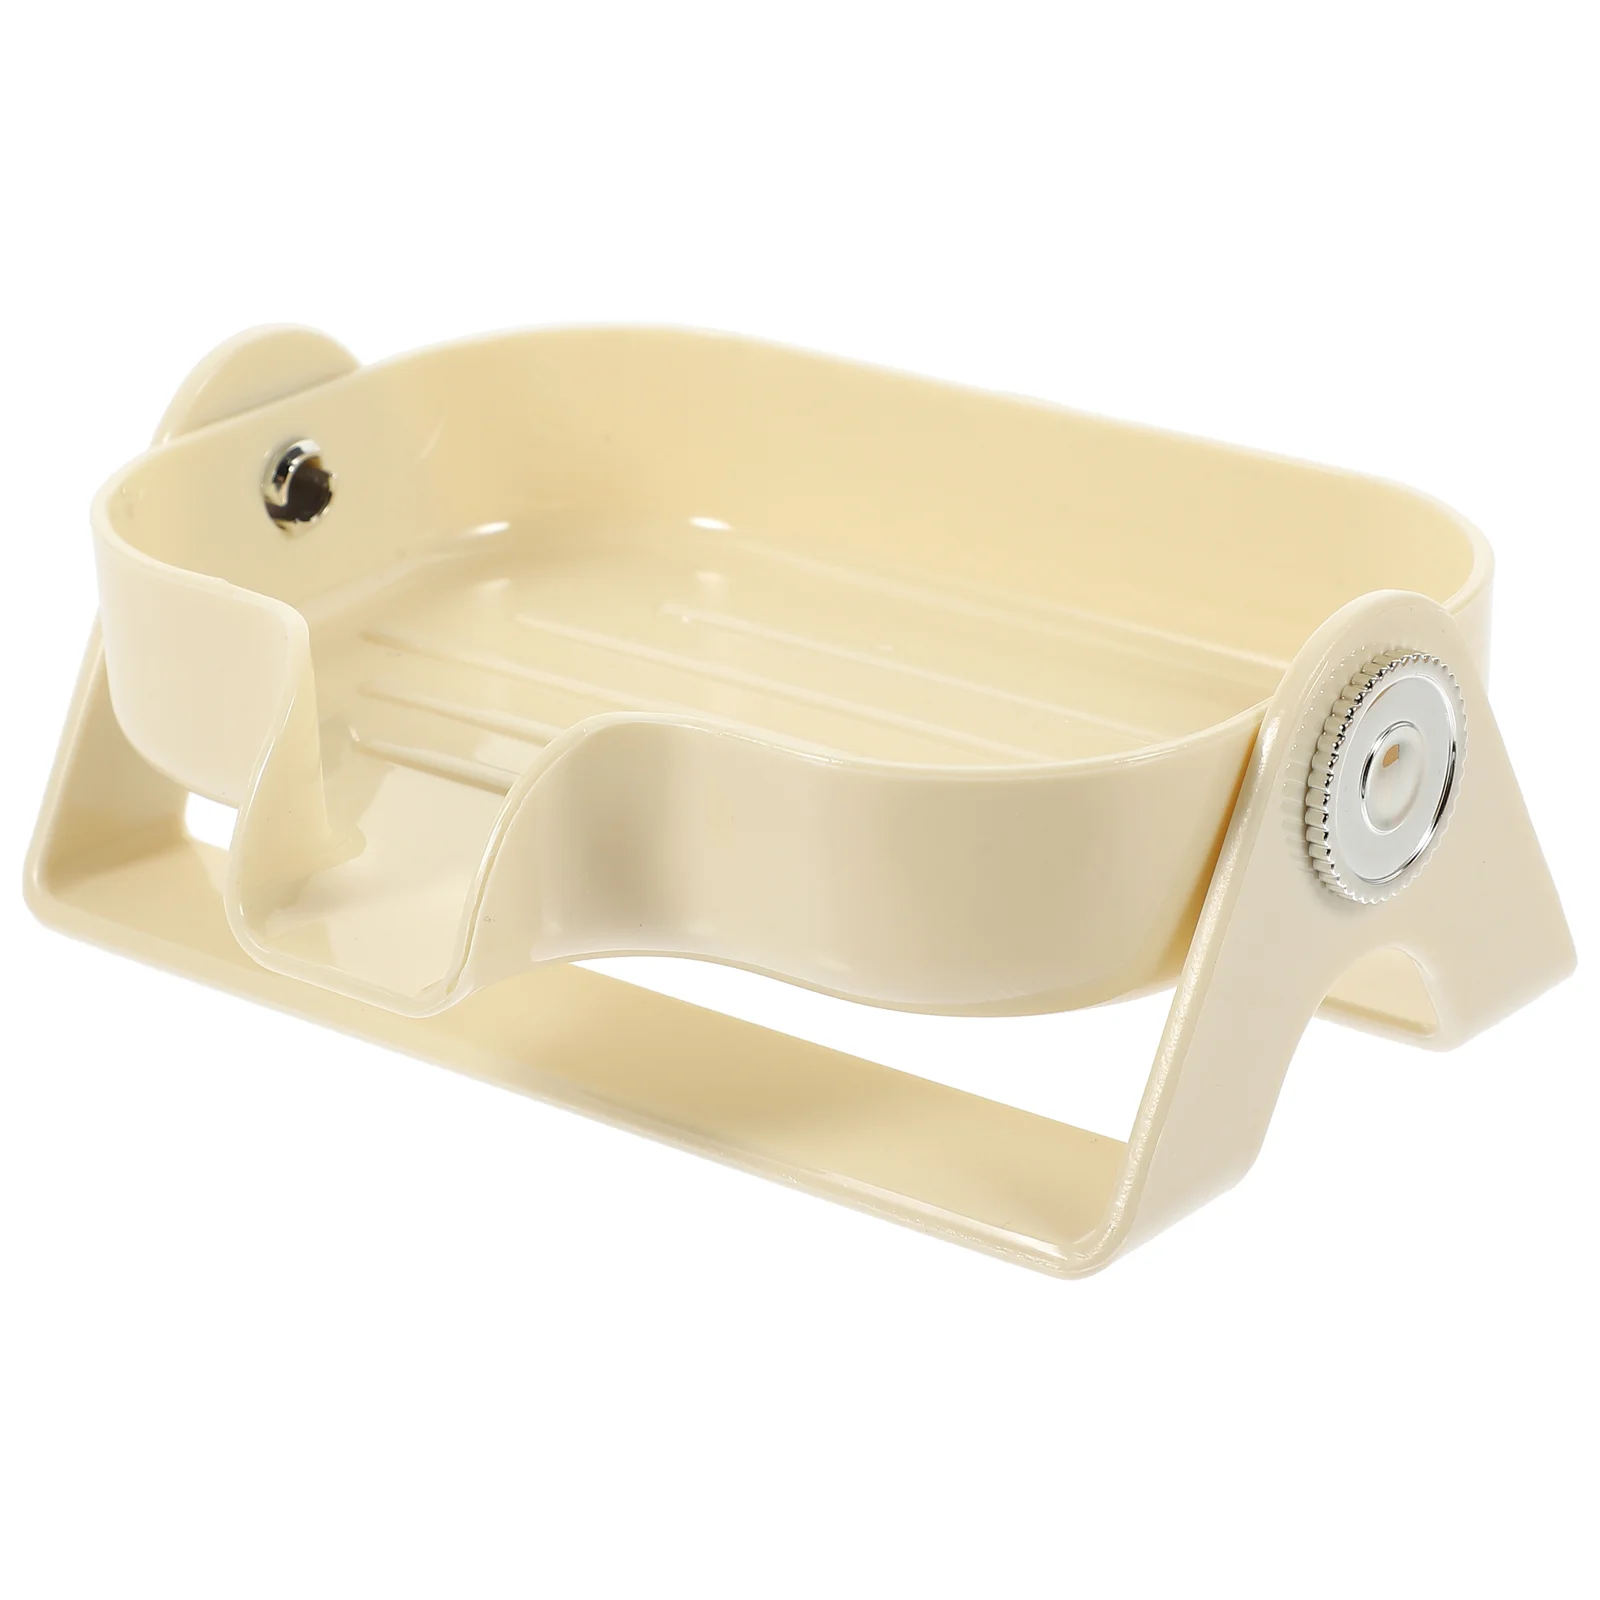 

Soap Holder Tray Dish Shower Bathroom Draining Self Bar Bathtub Container Saver Portable Plastic Waterfall Supplies Vanity Sink